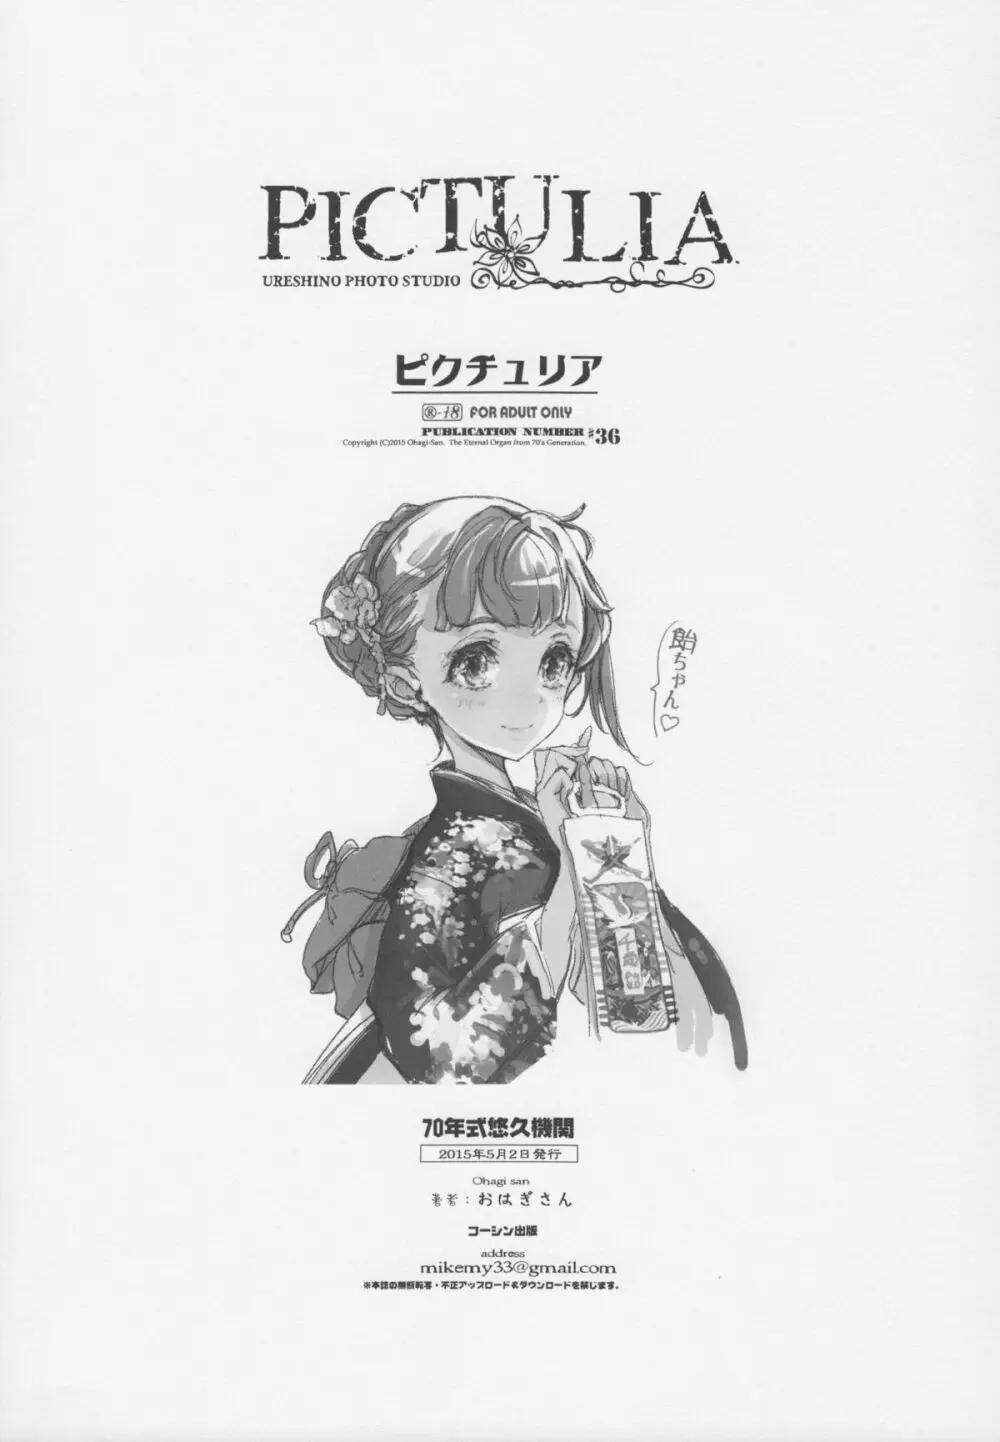 pictulia + 4Pリーフレット 39ページ